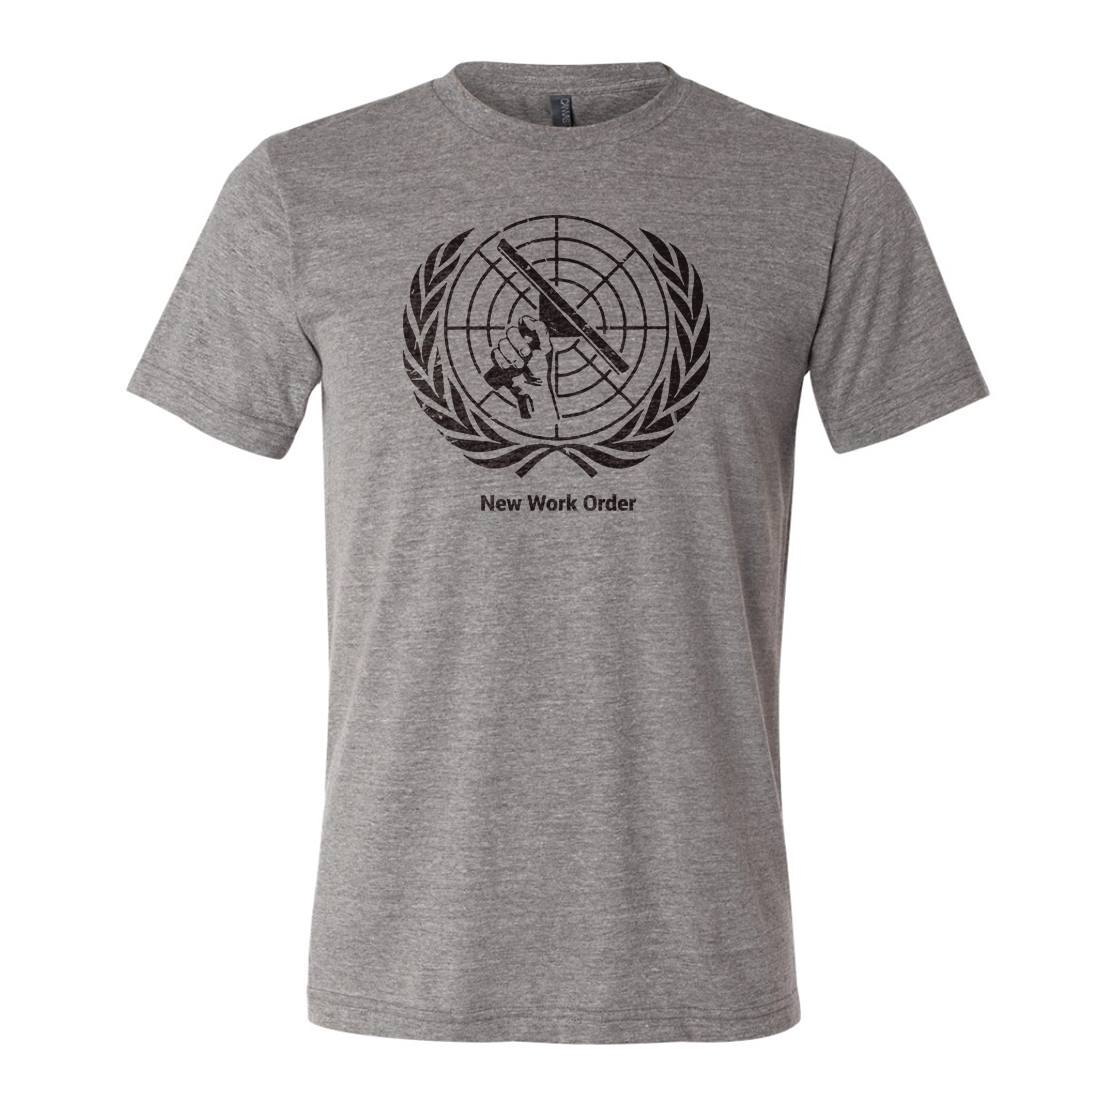 Chris T. Wilson T-Shirt - New Work Order - Size Large - Full View